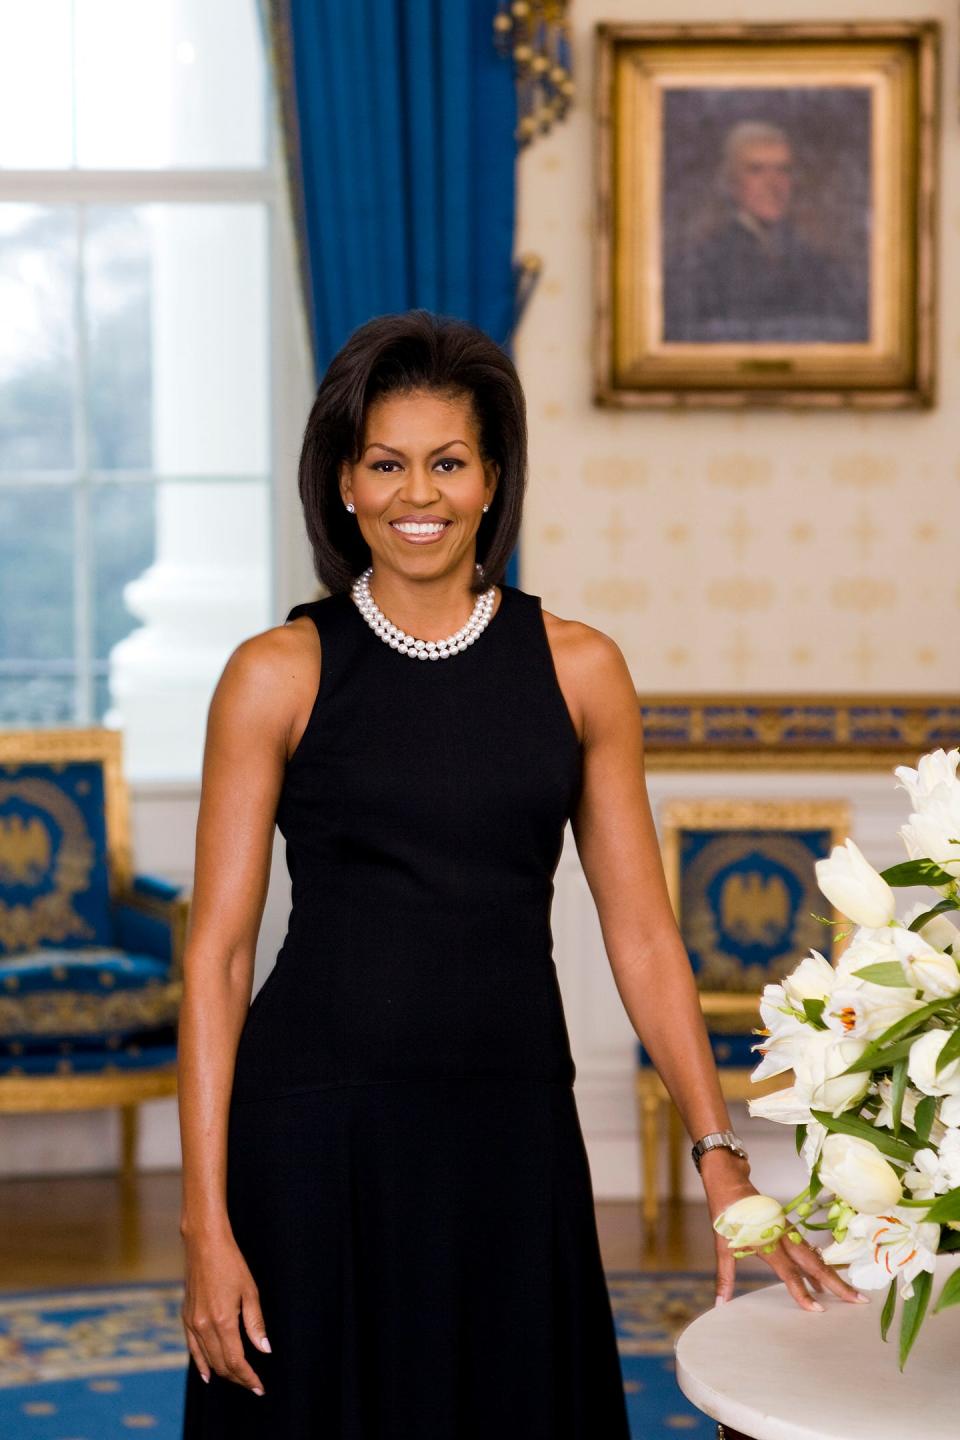 Michelle Obama's official White House portrait. She wears a black sleeveless sheath dress.